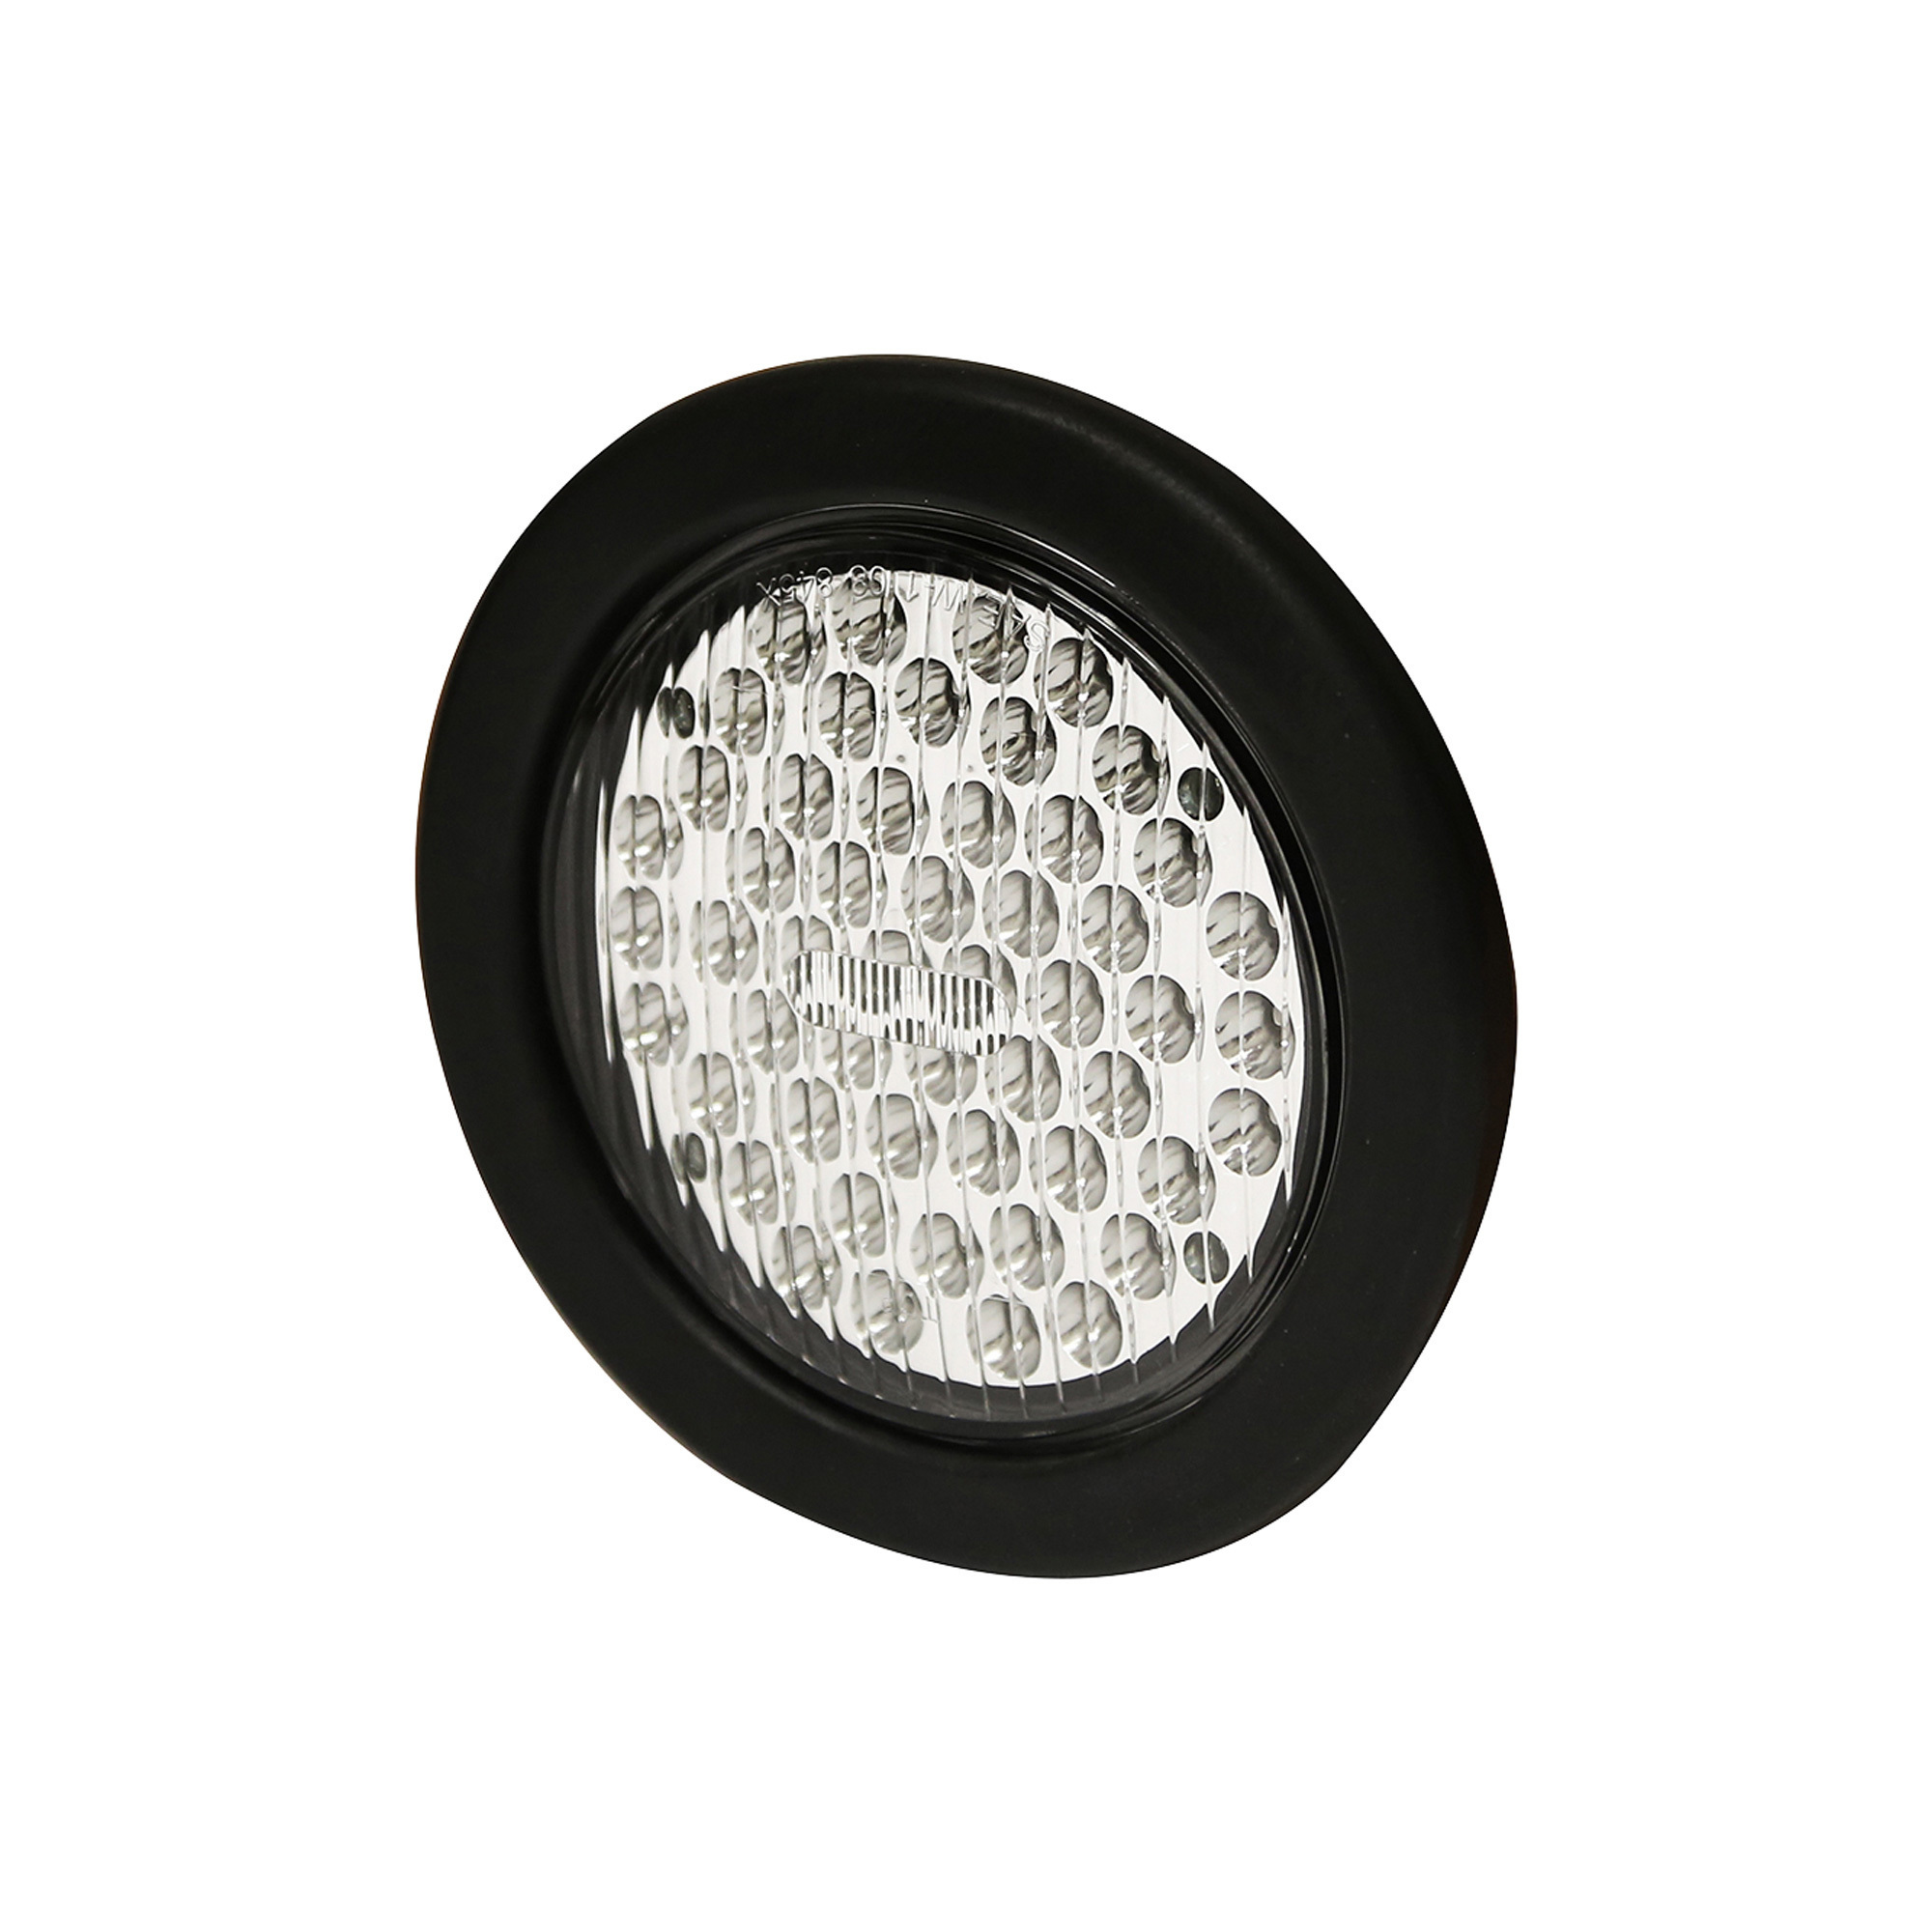 Ecco LED Directional Warning Light â Amber Lens, Round, Grommet Mount, Model 3945A